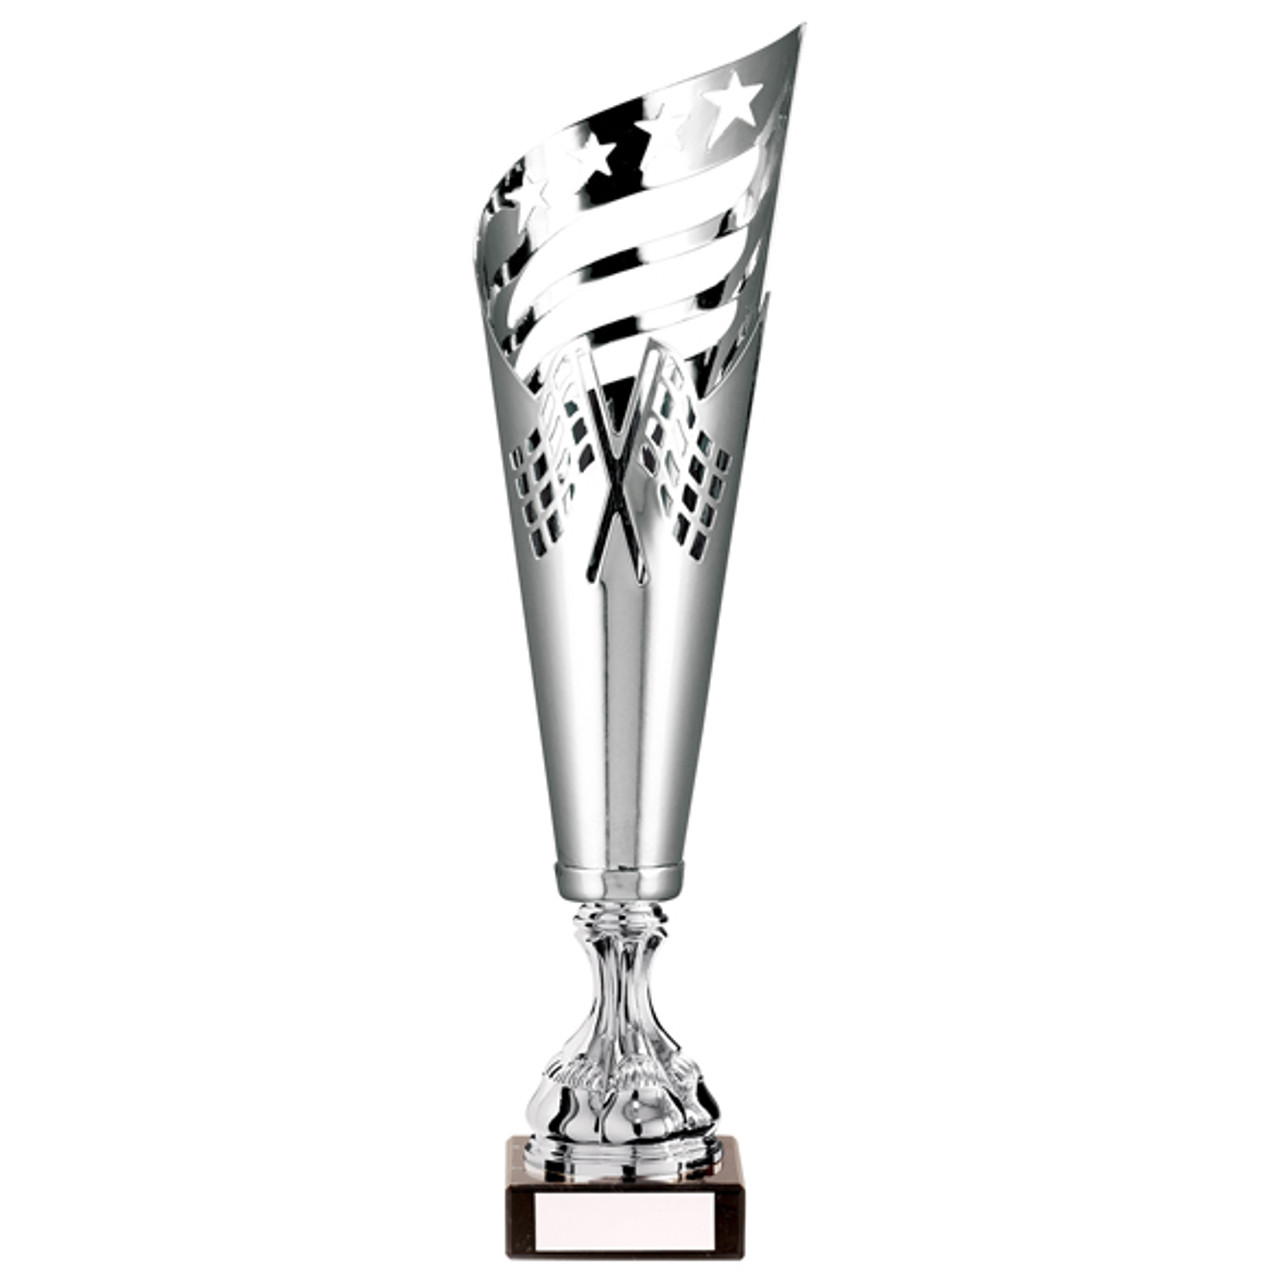 MONZA Silver Laser Cup Trophy Series